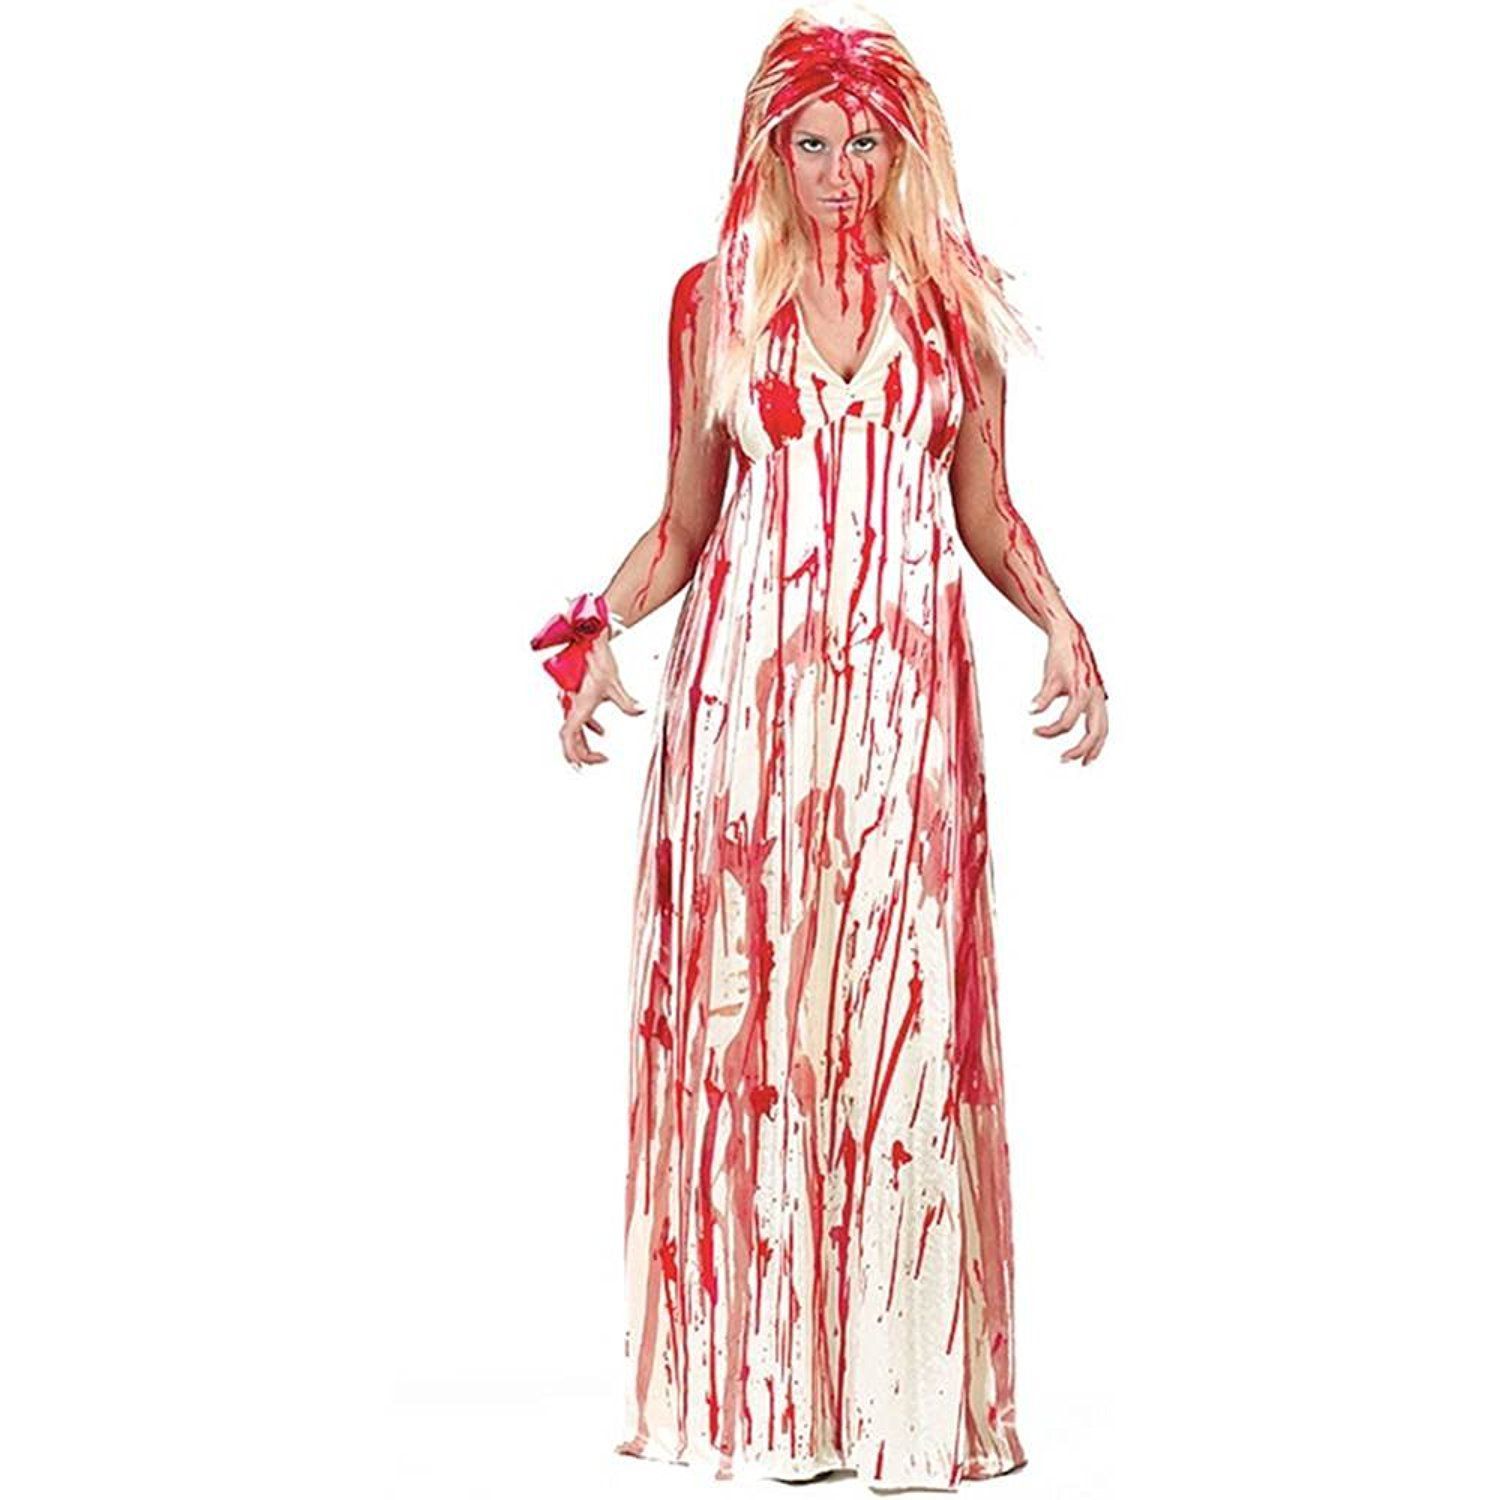 Girls Horror Bloody Nun Scary Gruesome Halloween Fancy Dress Costume Outfit 3-12 